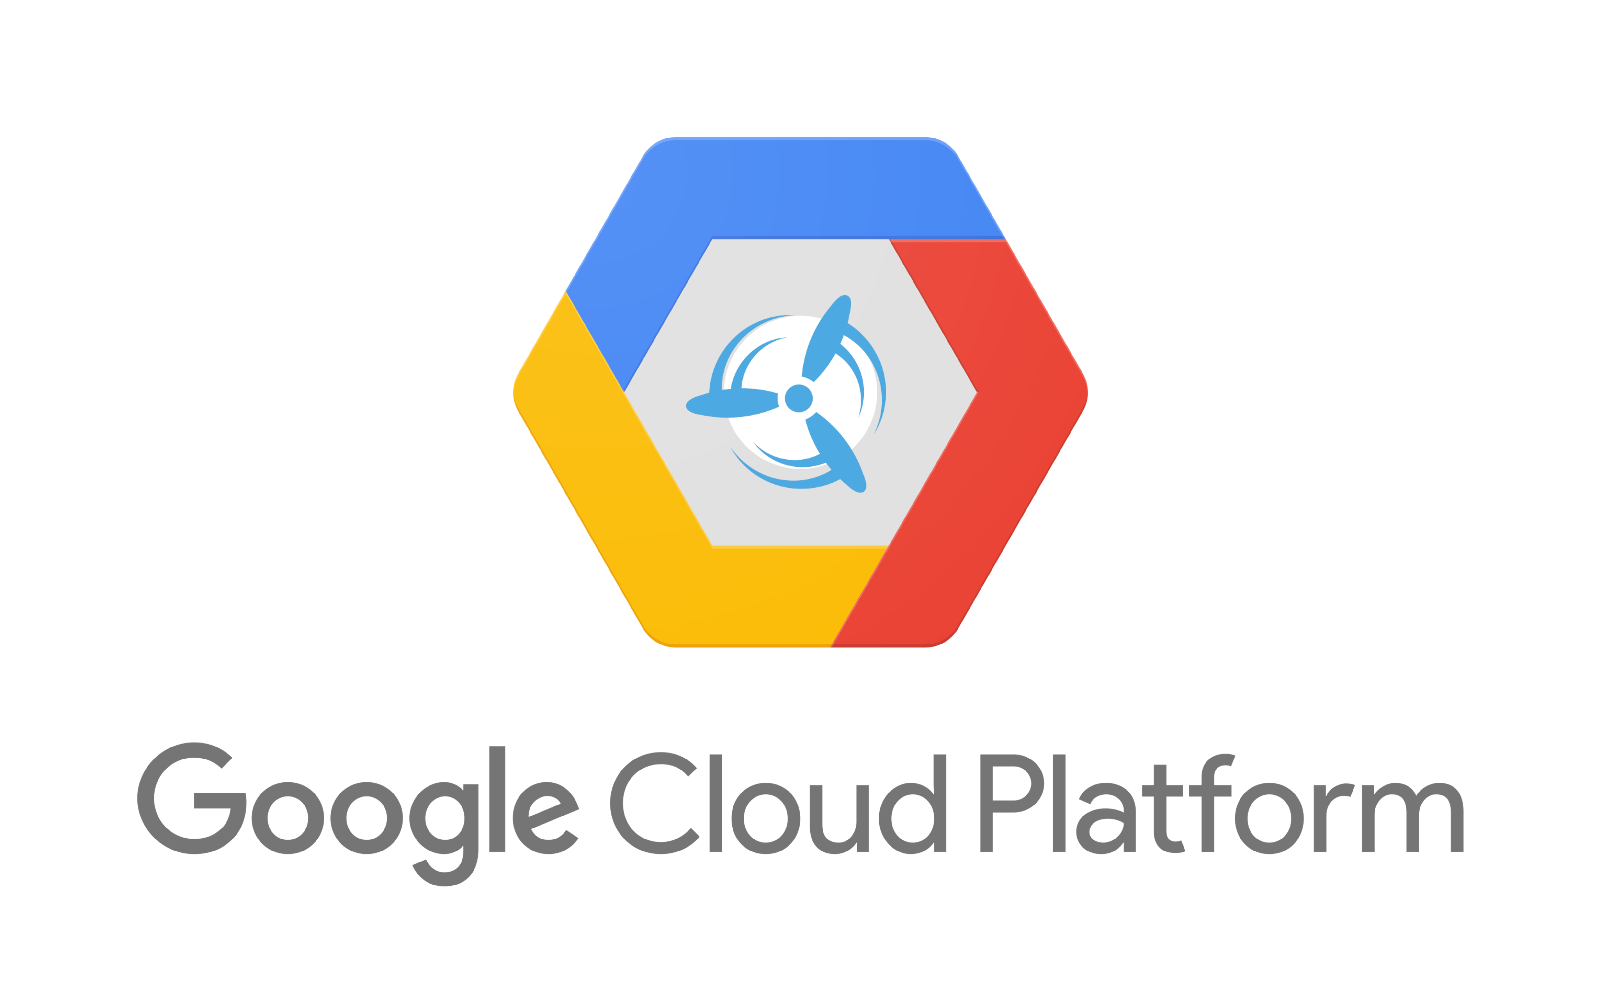 Overview of Google Cloud Platform(GCP)